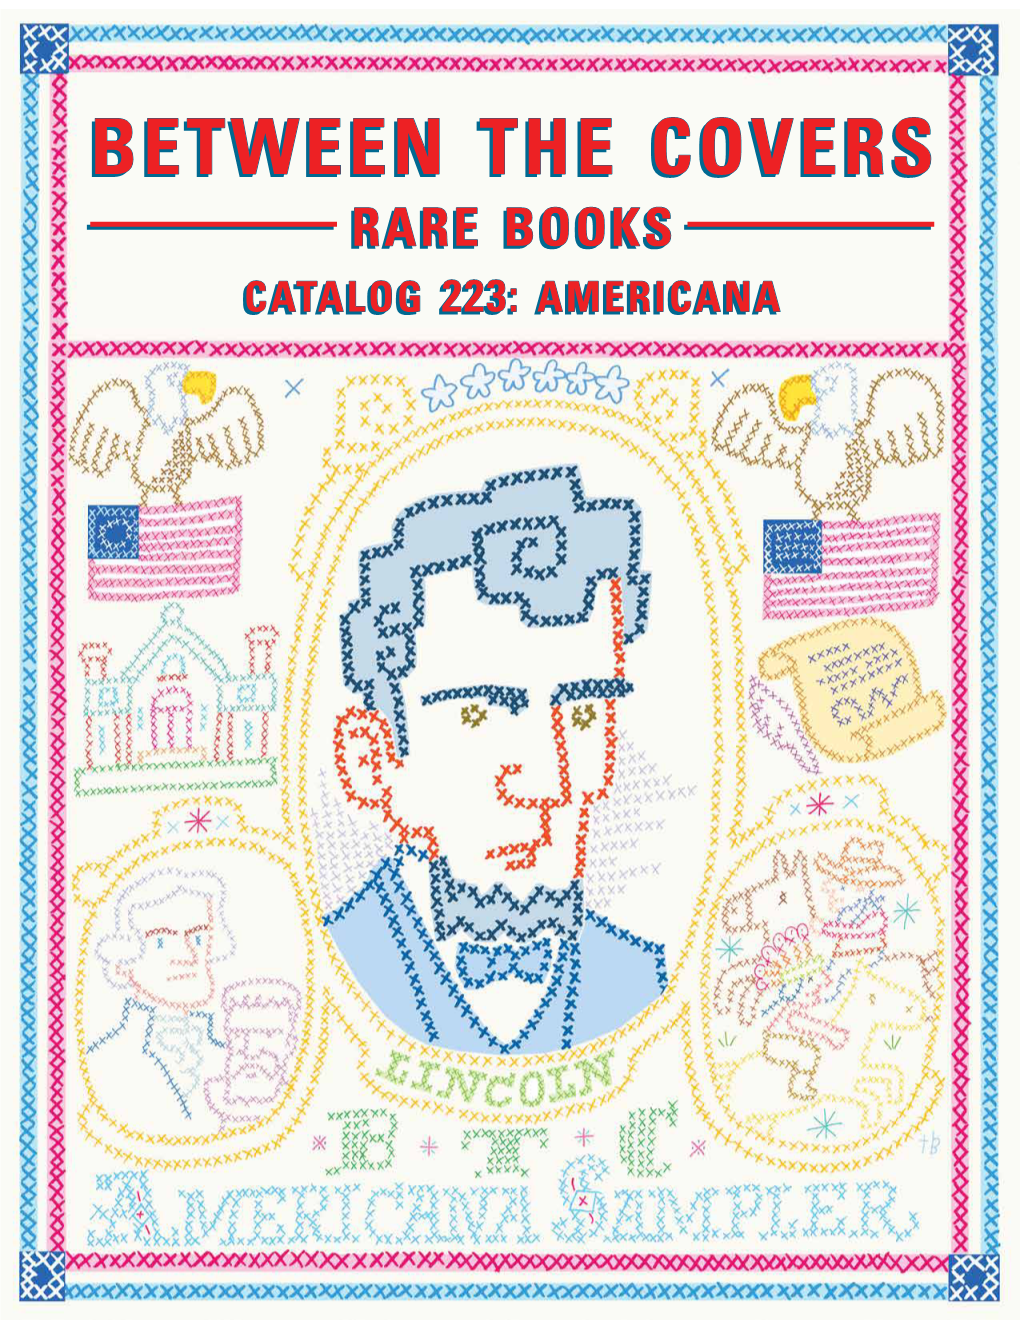 Catalogcatalog 223:223: Americanaamericana BETWEEN the COVERS RARE BOOKS CATALOG 223: AMERICANA